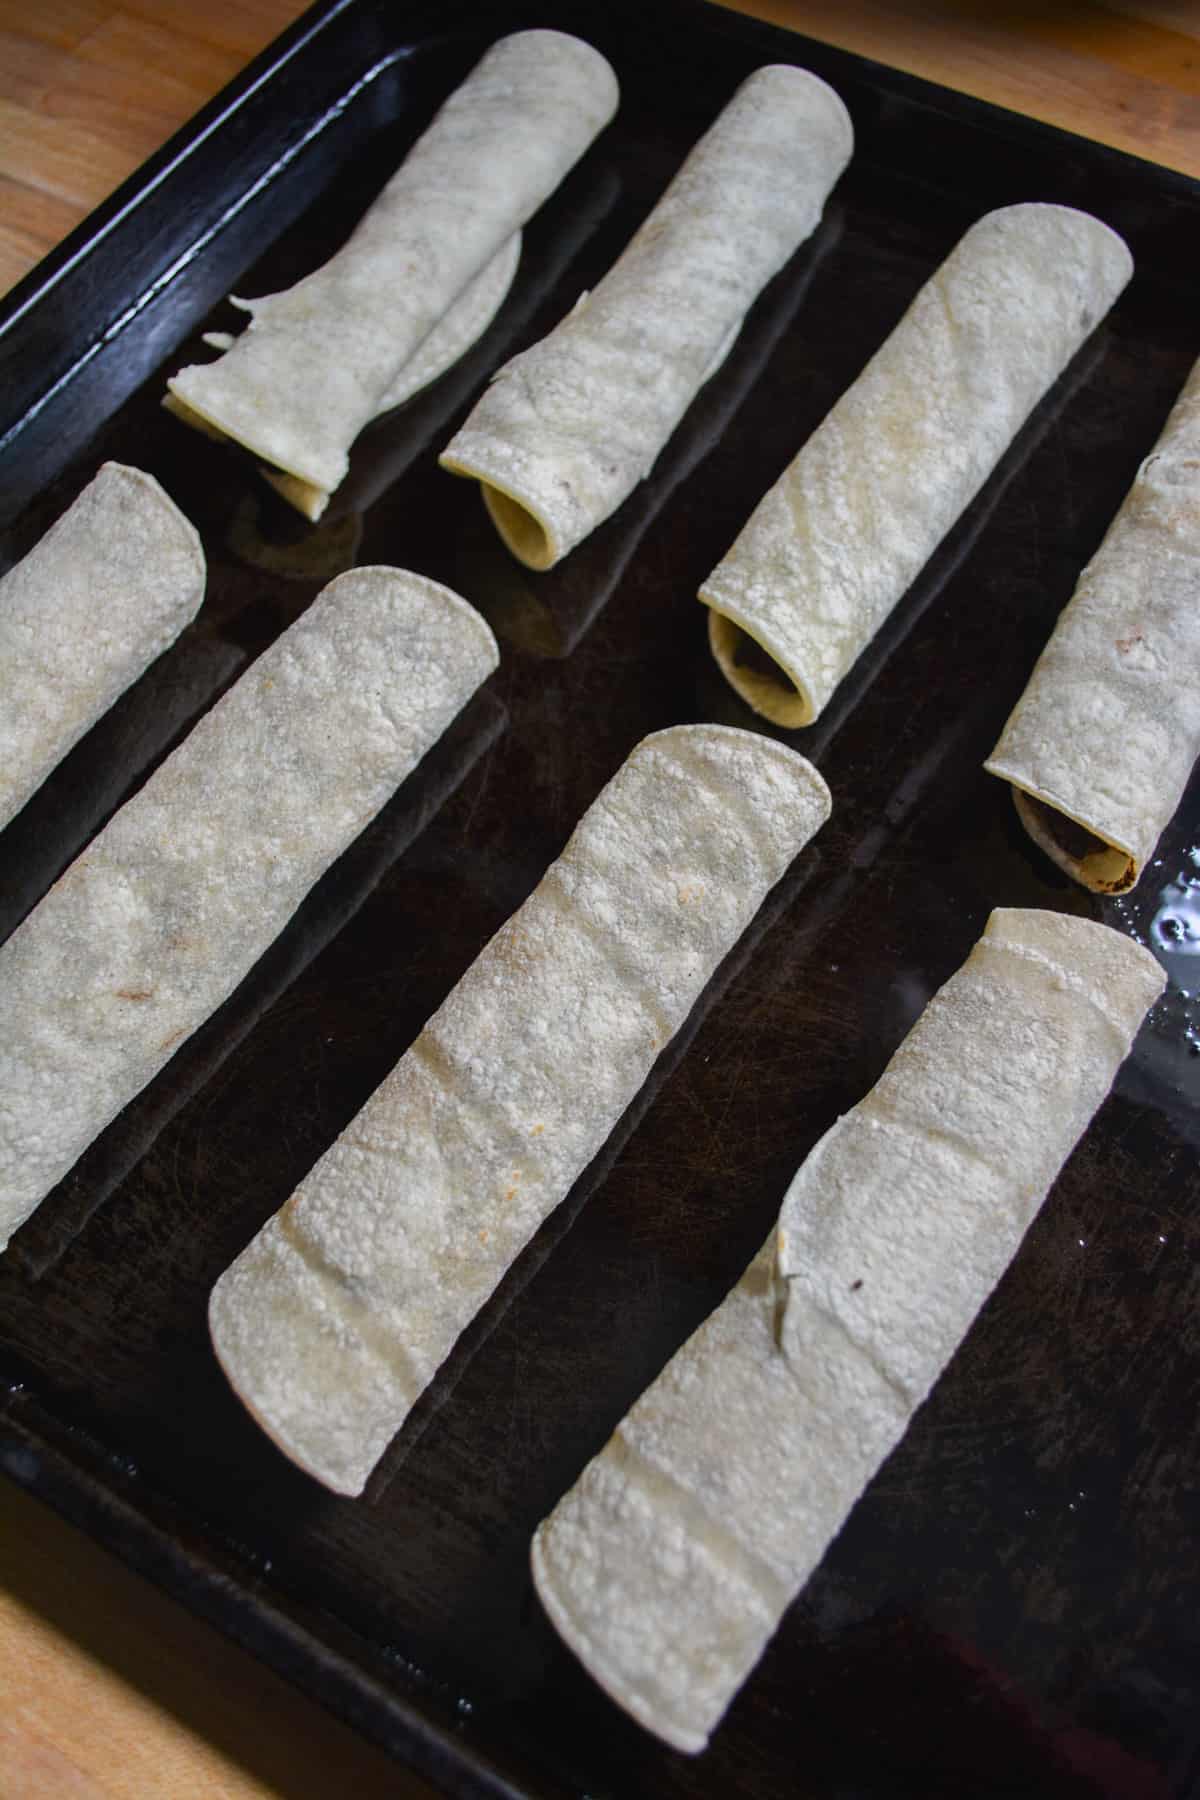 Taquitos on a baking sheet.